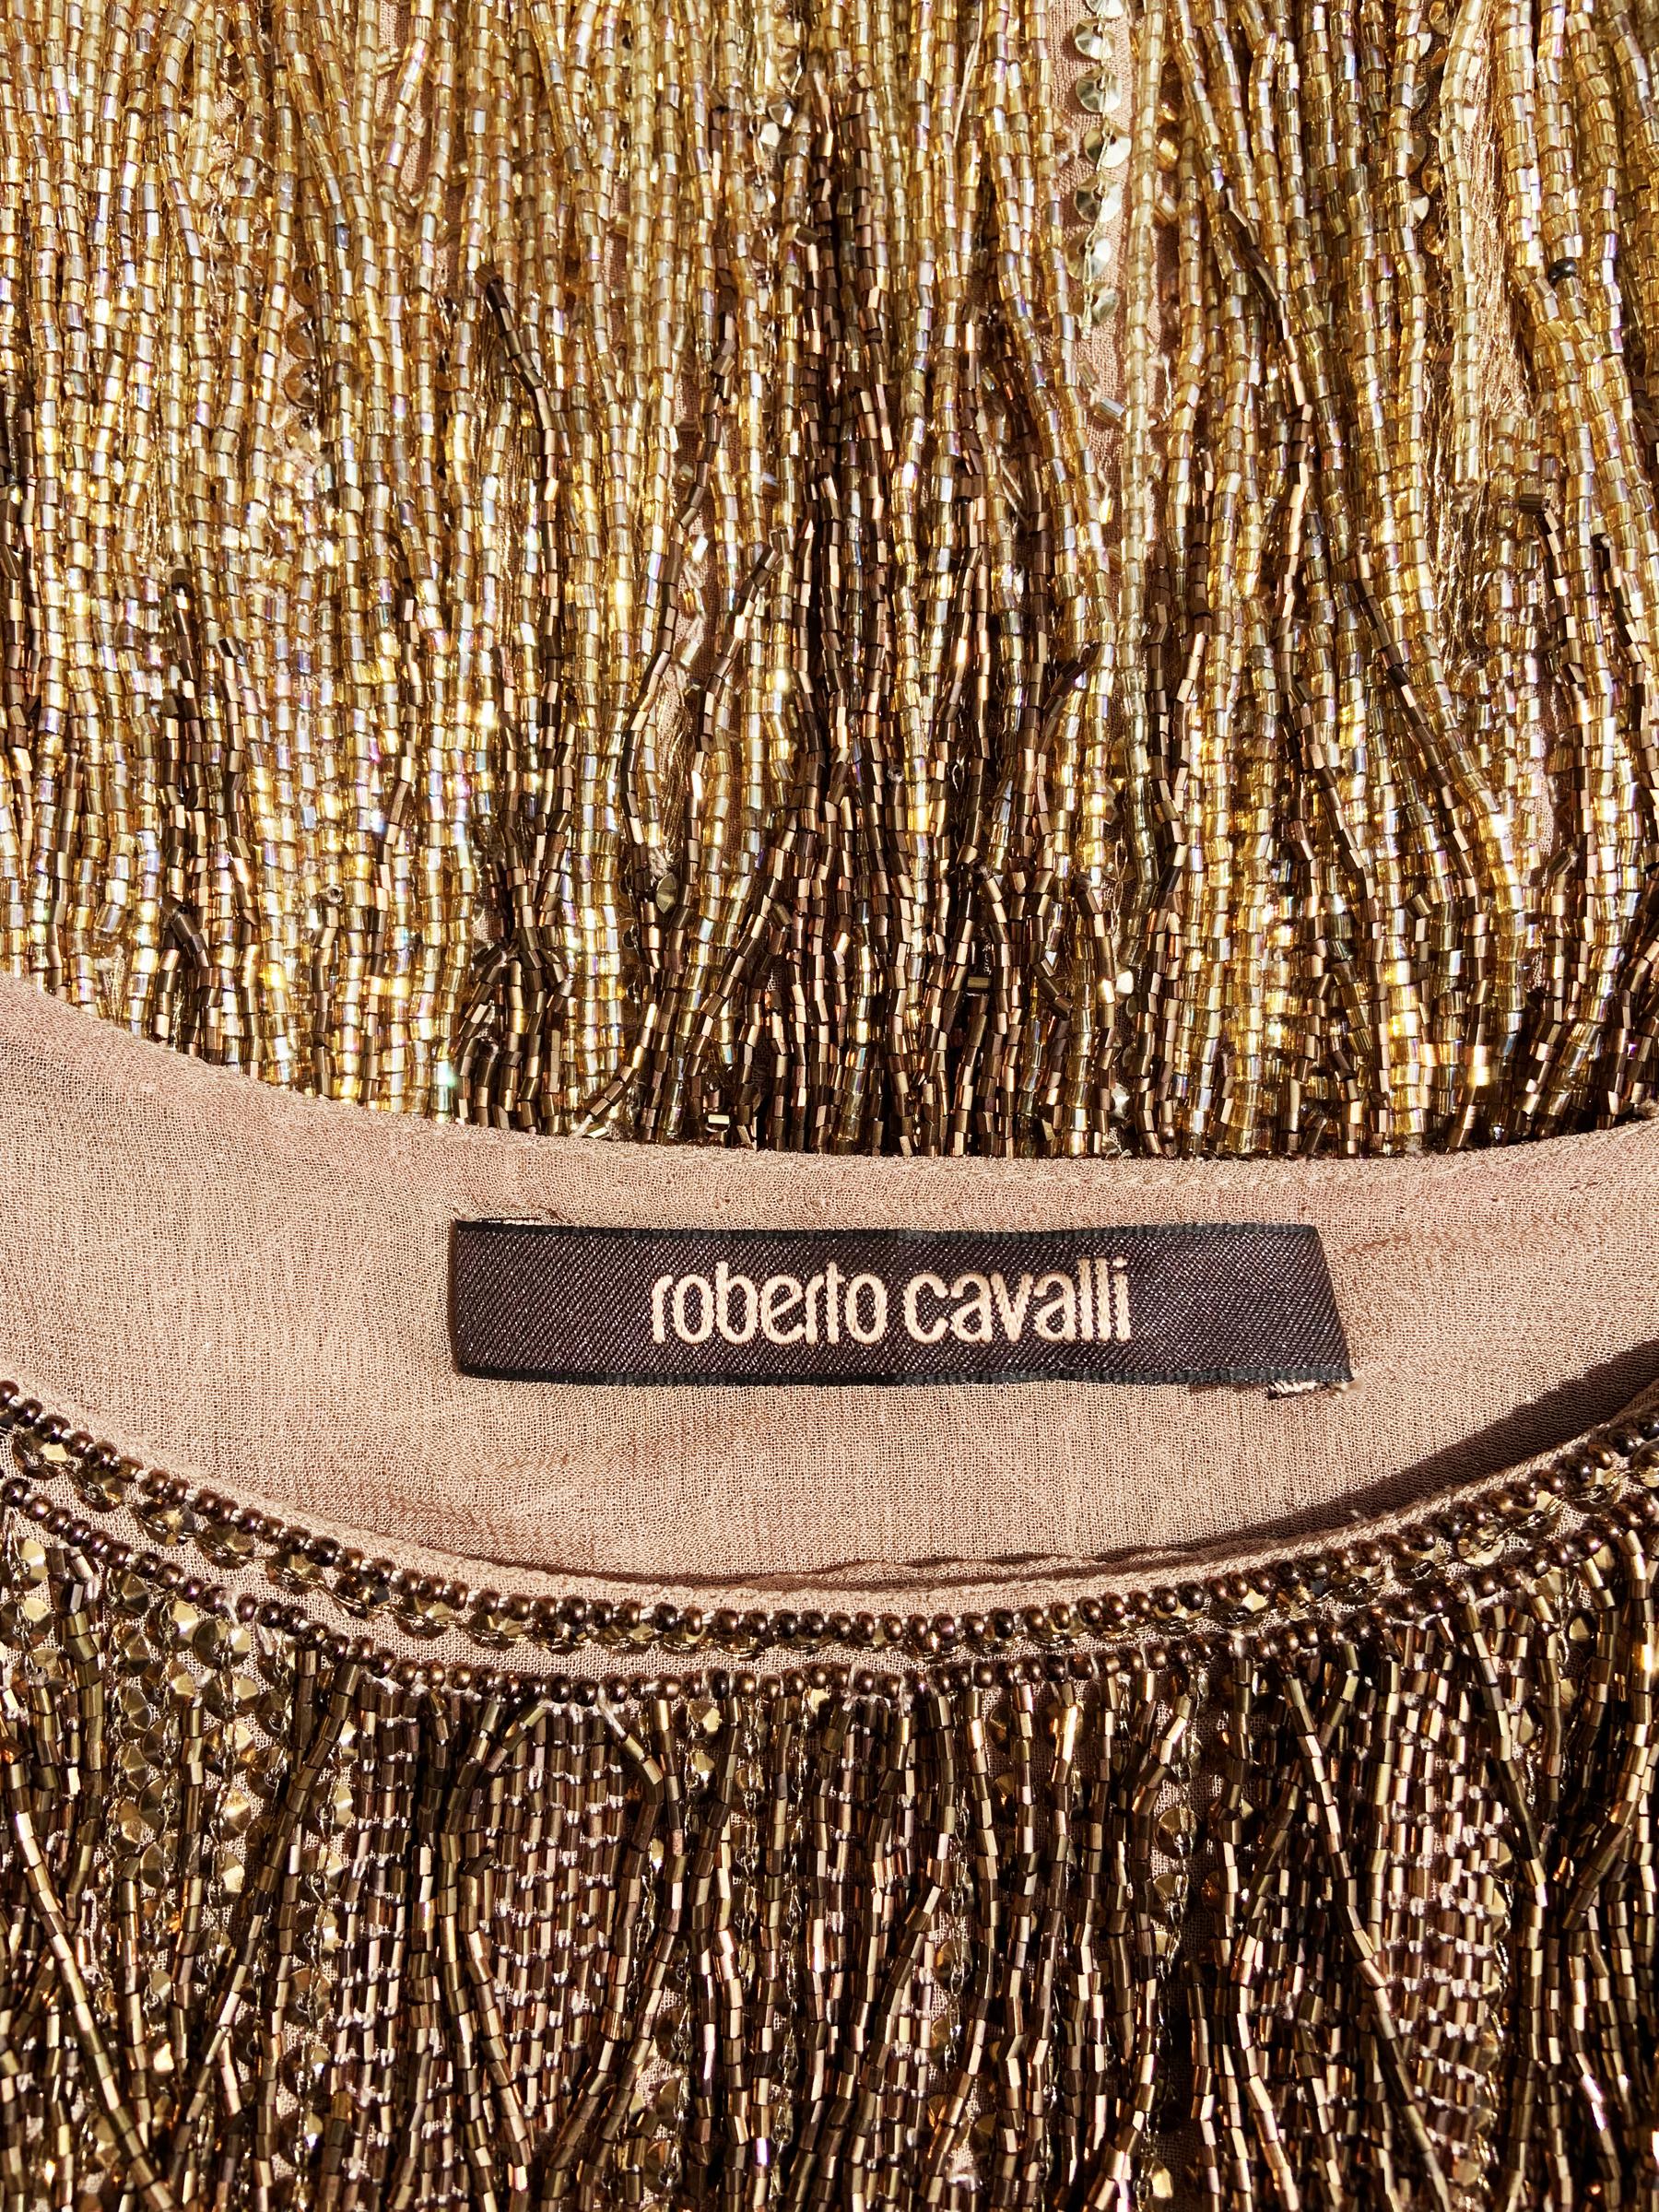 Iconic MUSEUM Roberto Cavalli Fringe Beaded Dress as seen on TAYLOR SWIFT It. 40 10